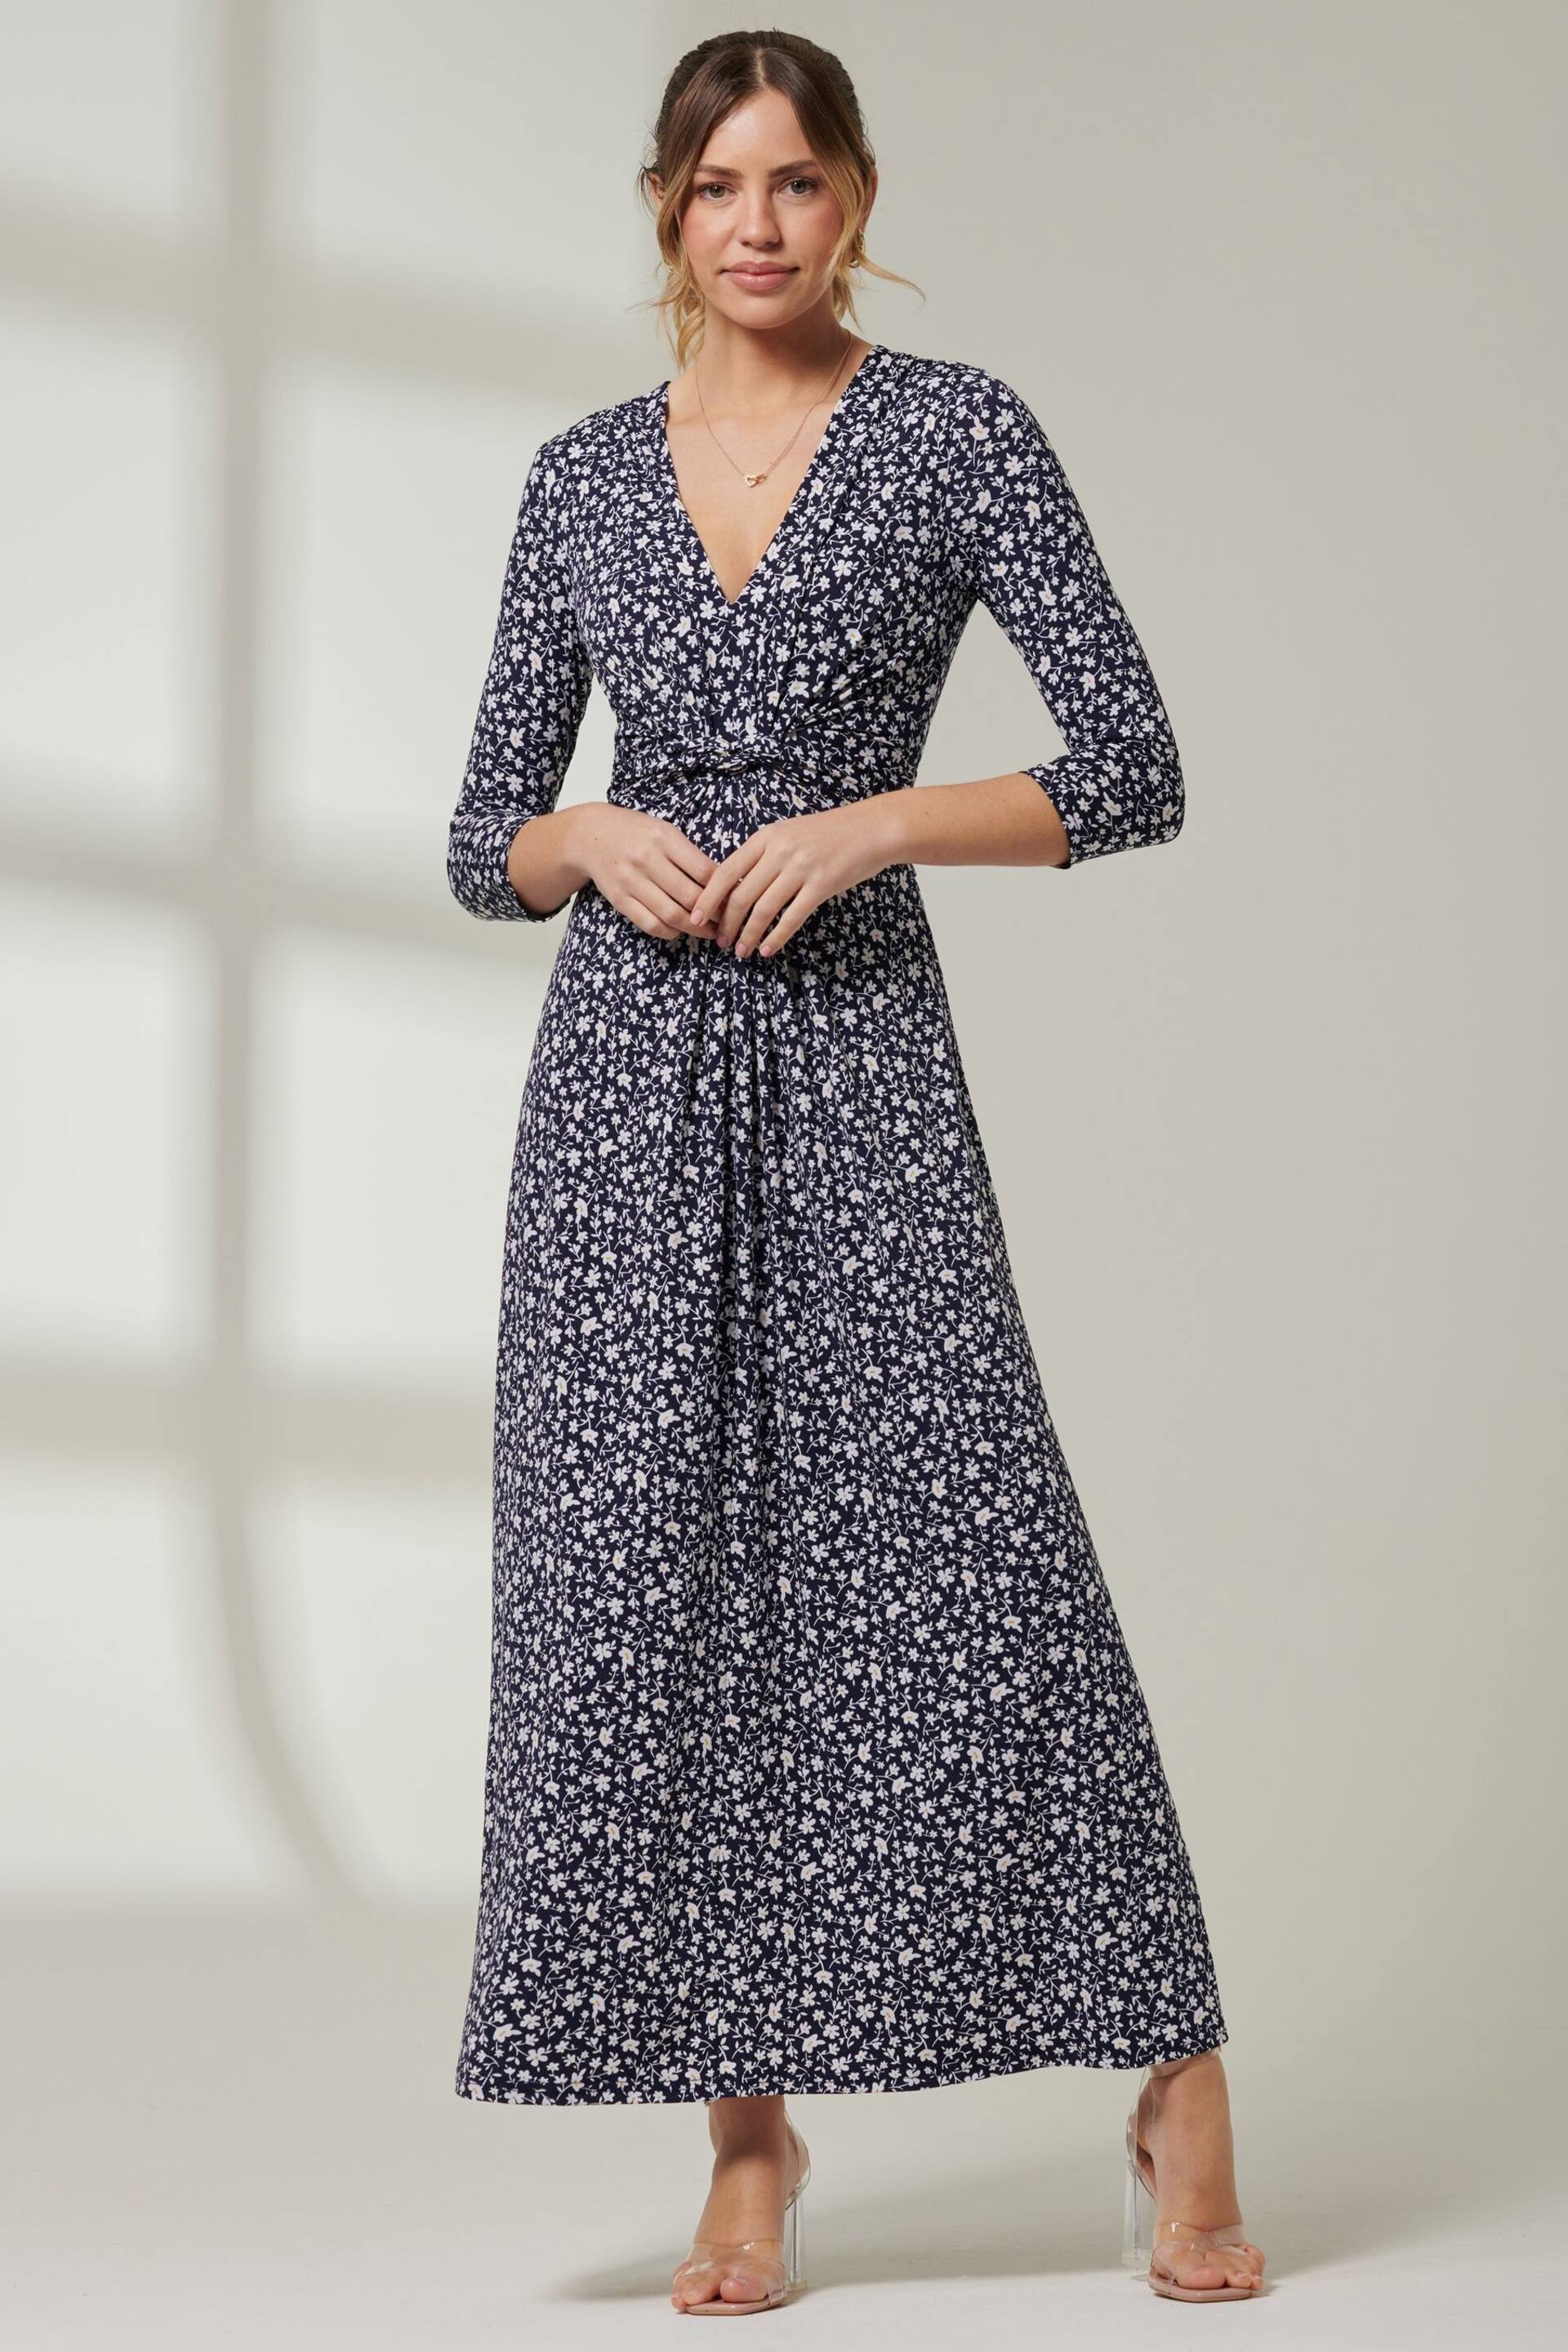 Jolie Moi Blue V-Neck 3/4 Sleeve Jersey Maxi Dress - Image 6 of 6